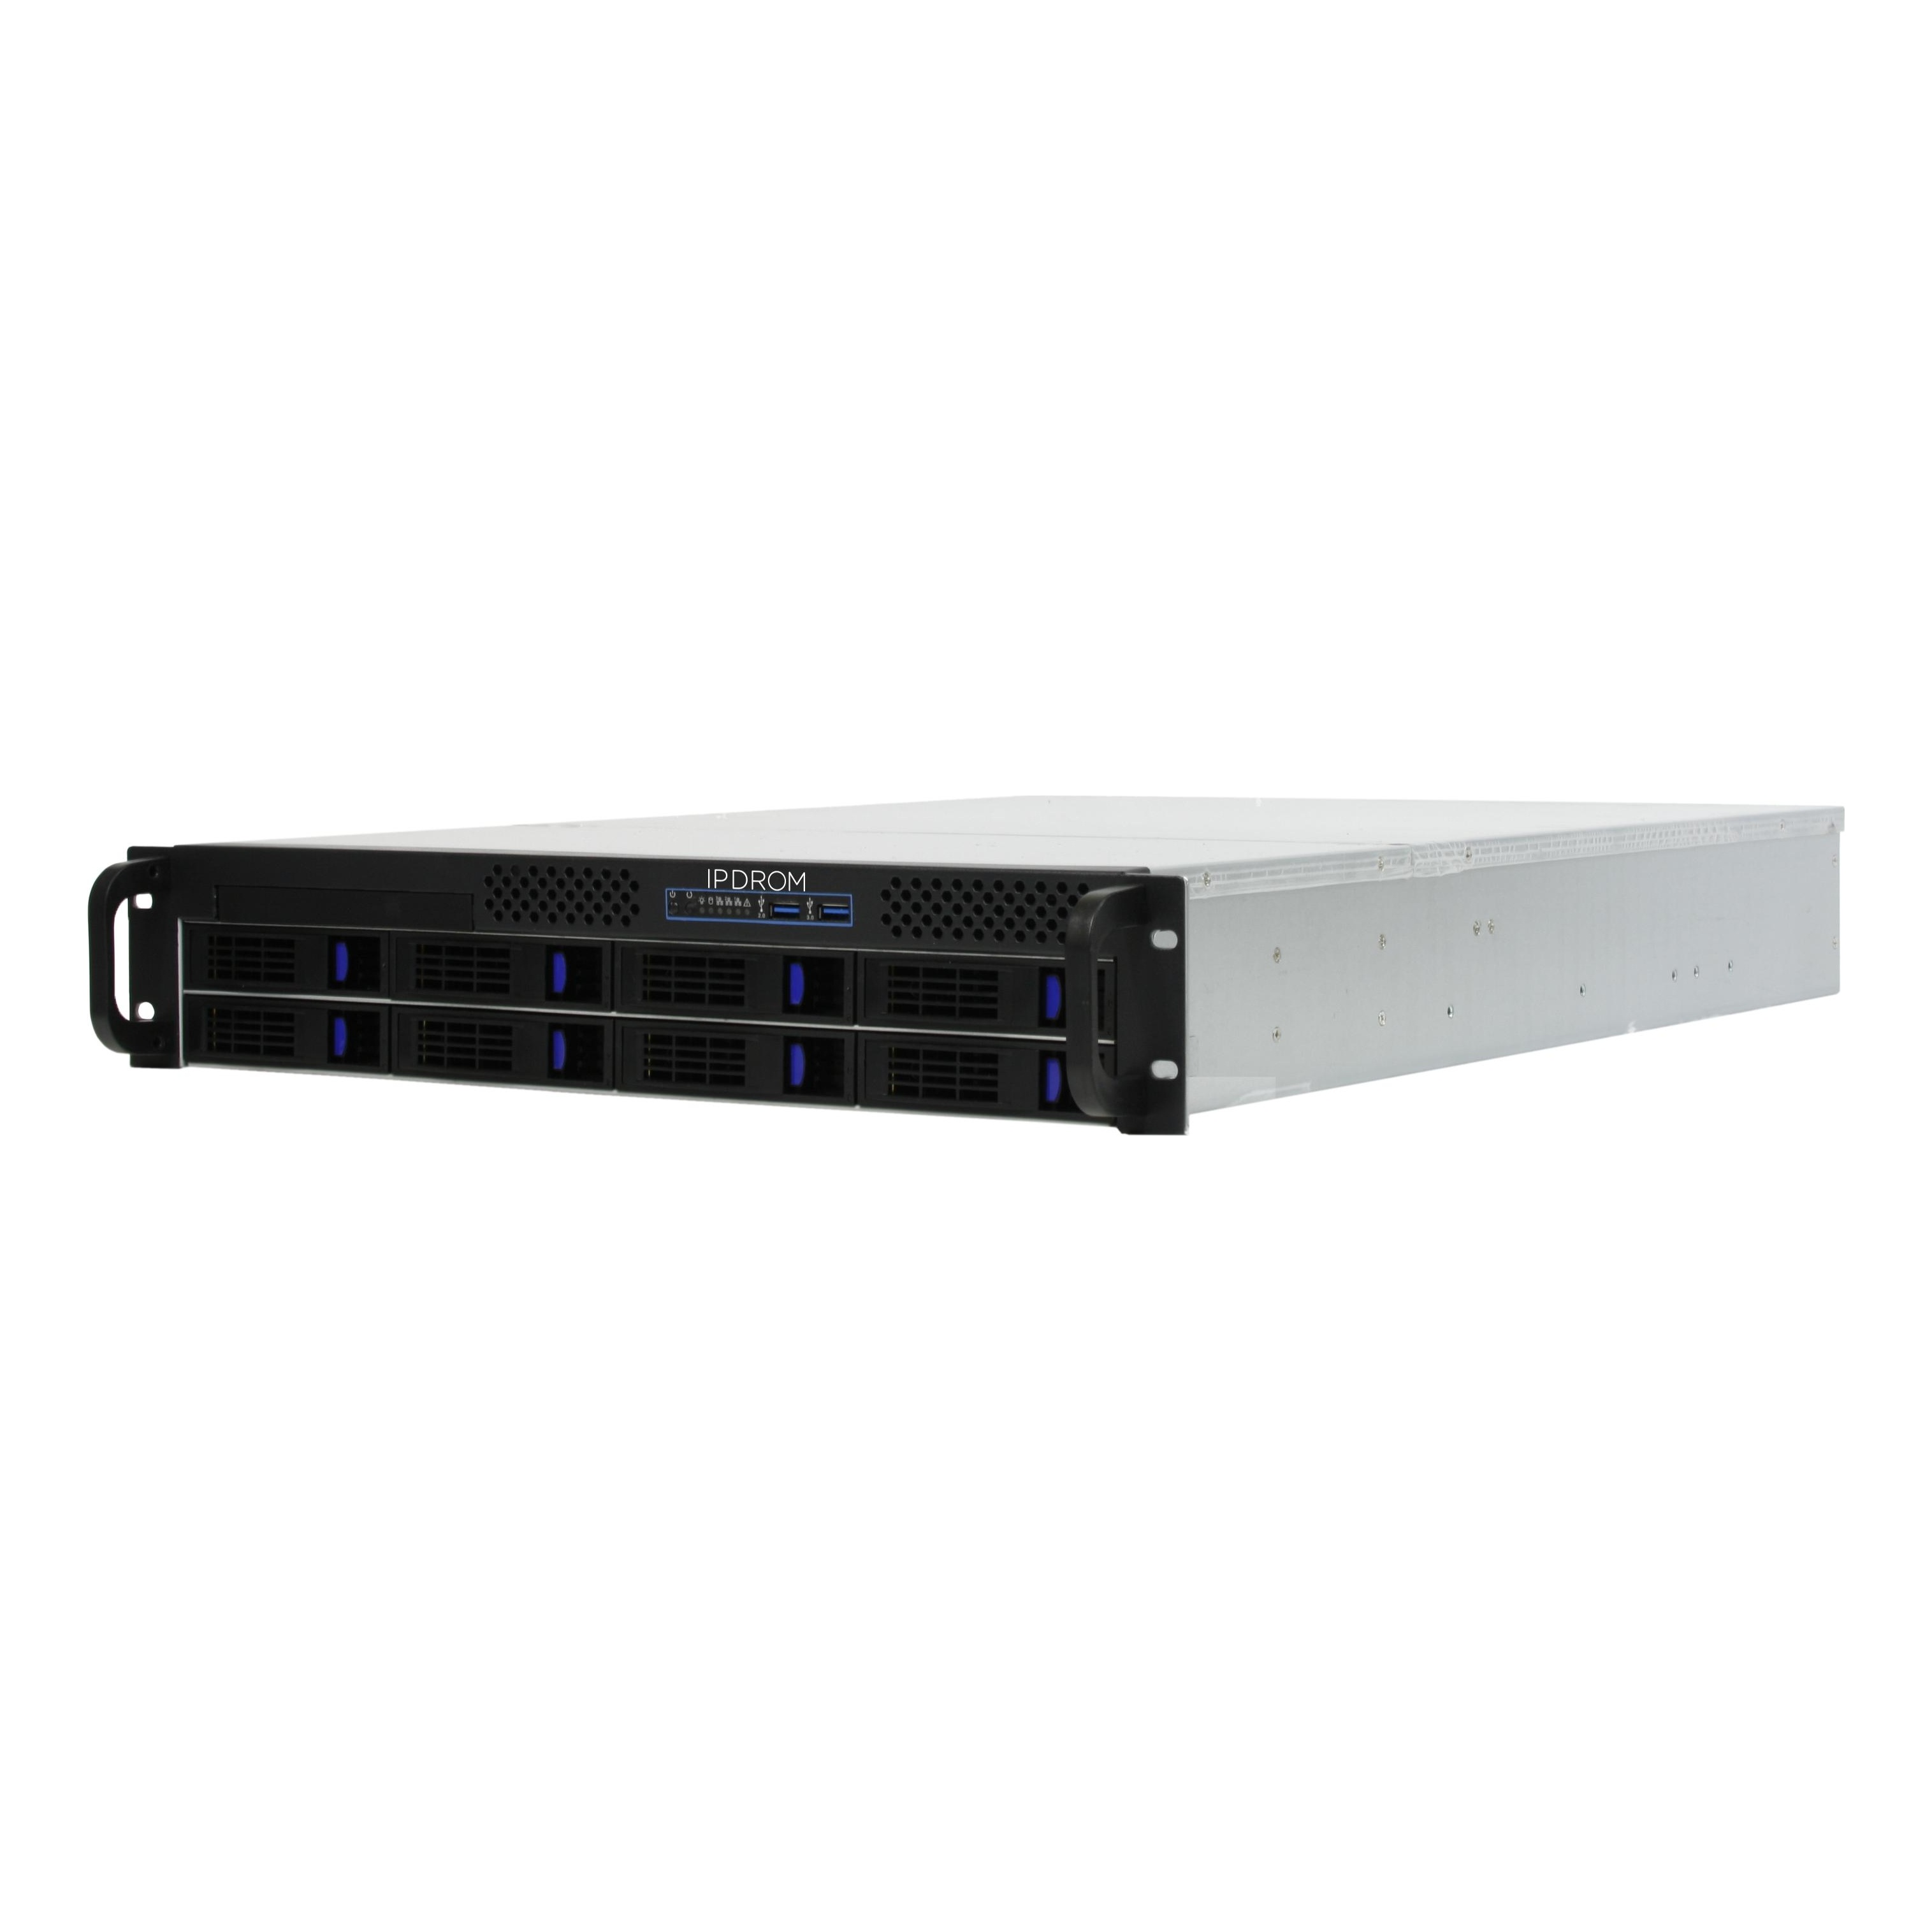 Сервер IPDROM Enterprise (E-16-РД-С2-12/Р5-2Э)